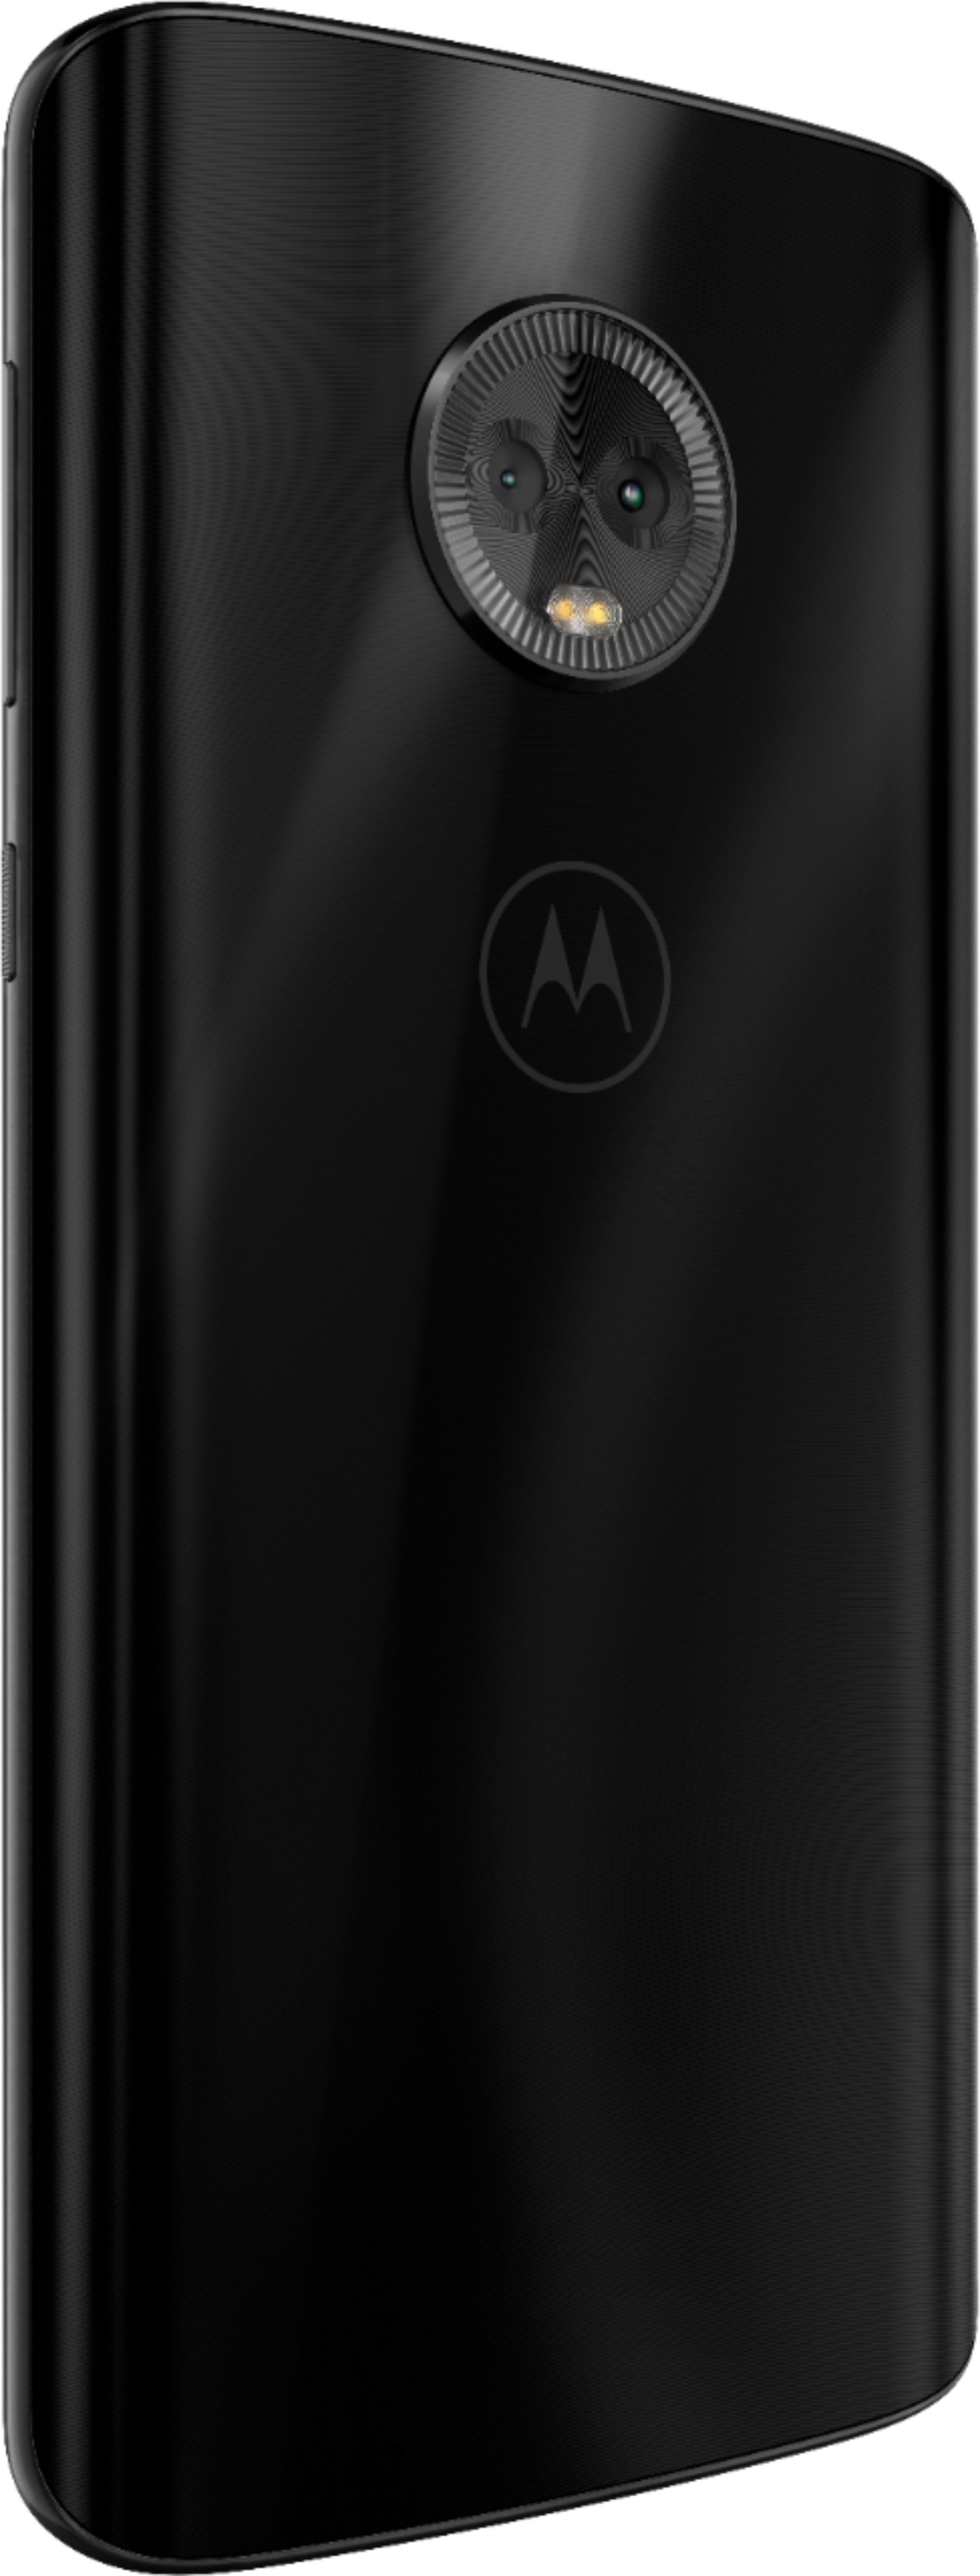 Avondeten Soeverein gijzelaar Best Buy: Motorola Moto G6 with 32GB Memory Cell Phone (Unlocked) Black  PAAE0000US